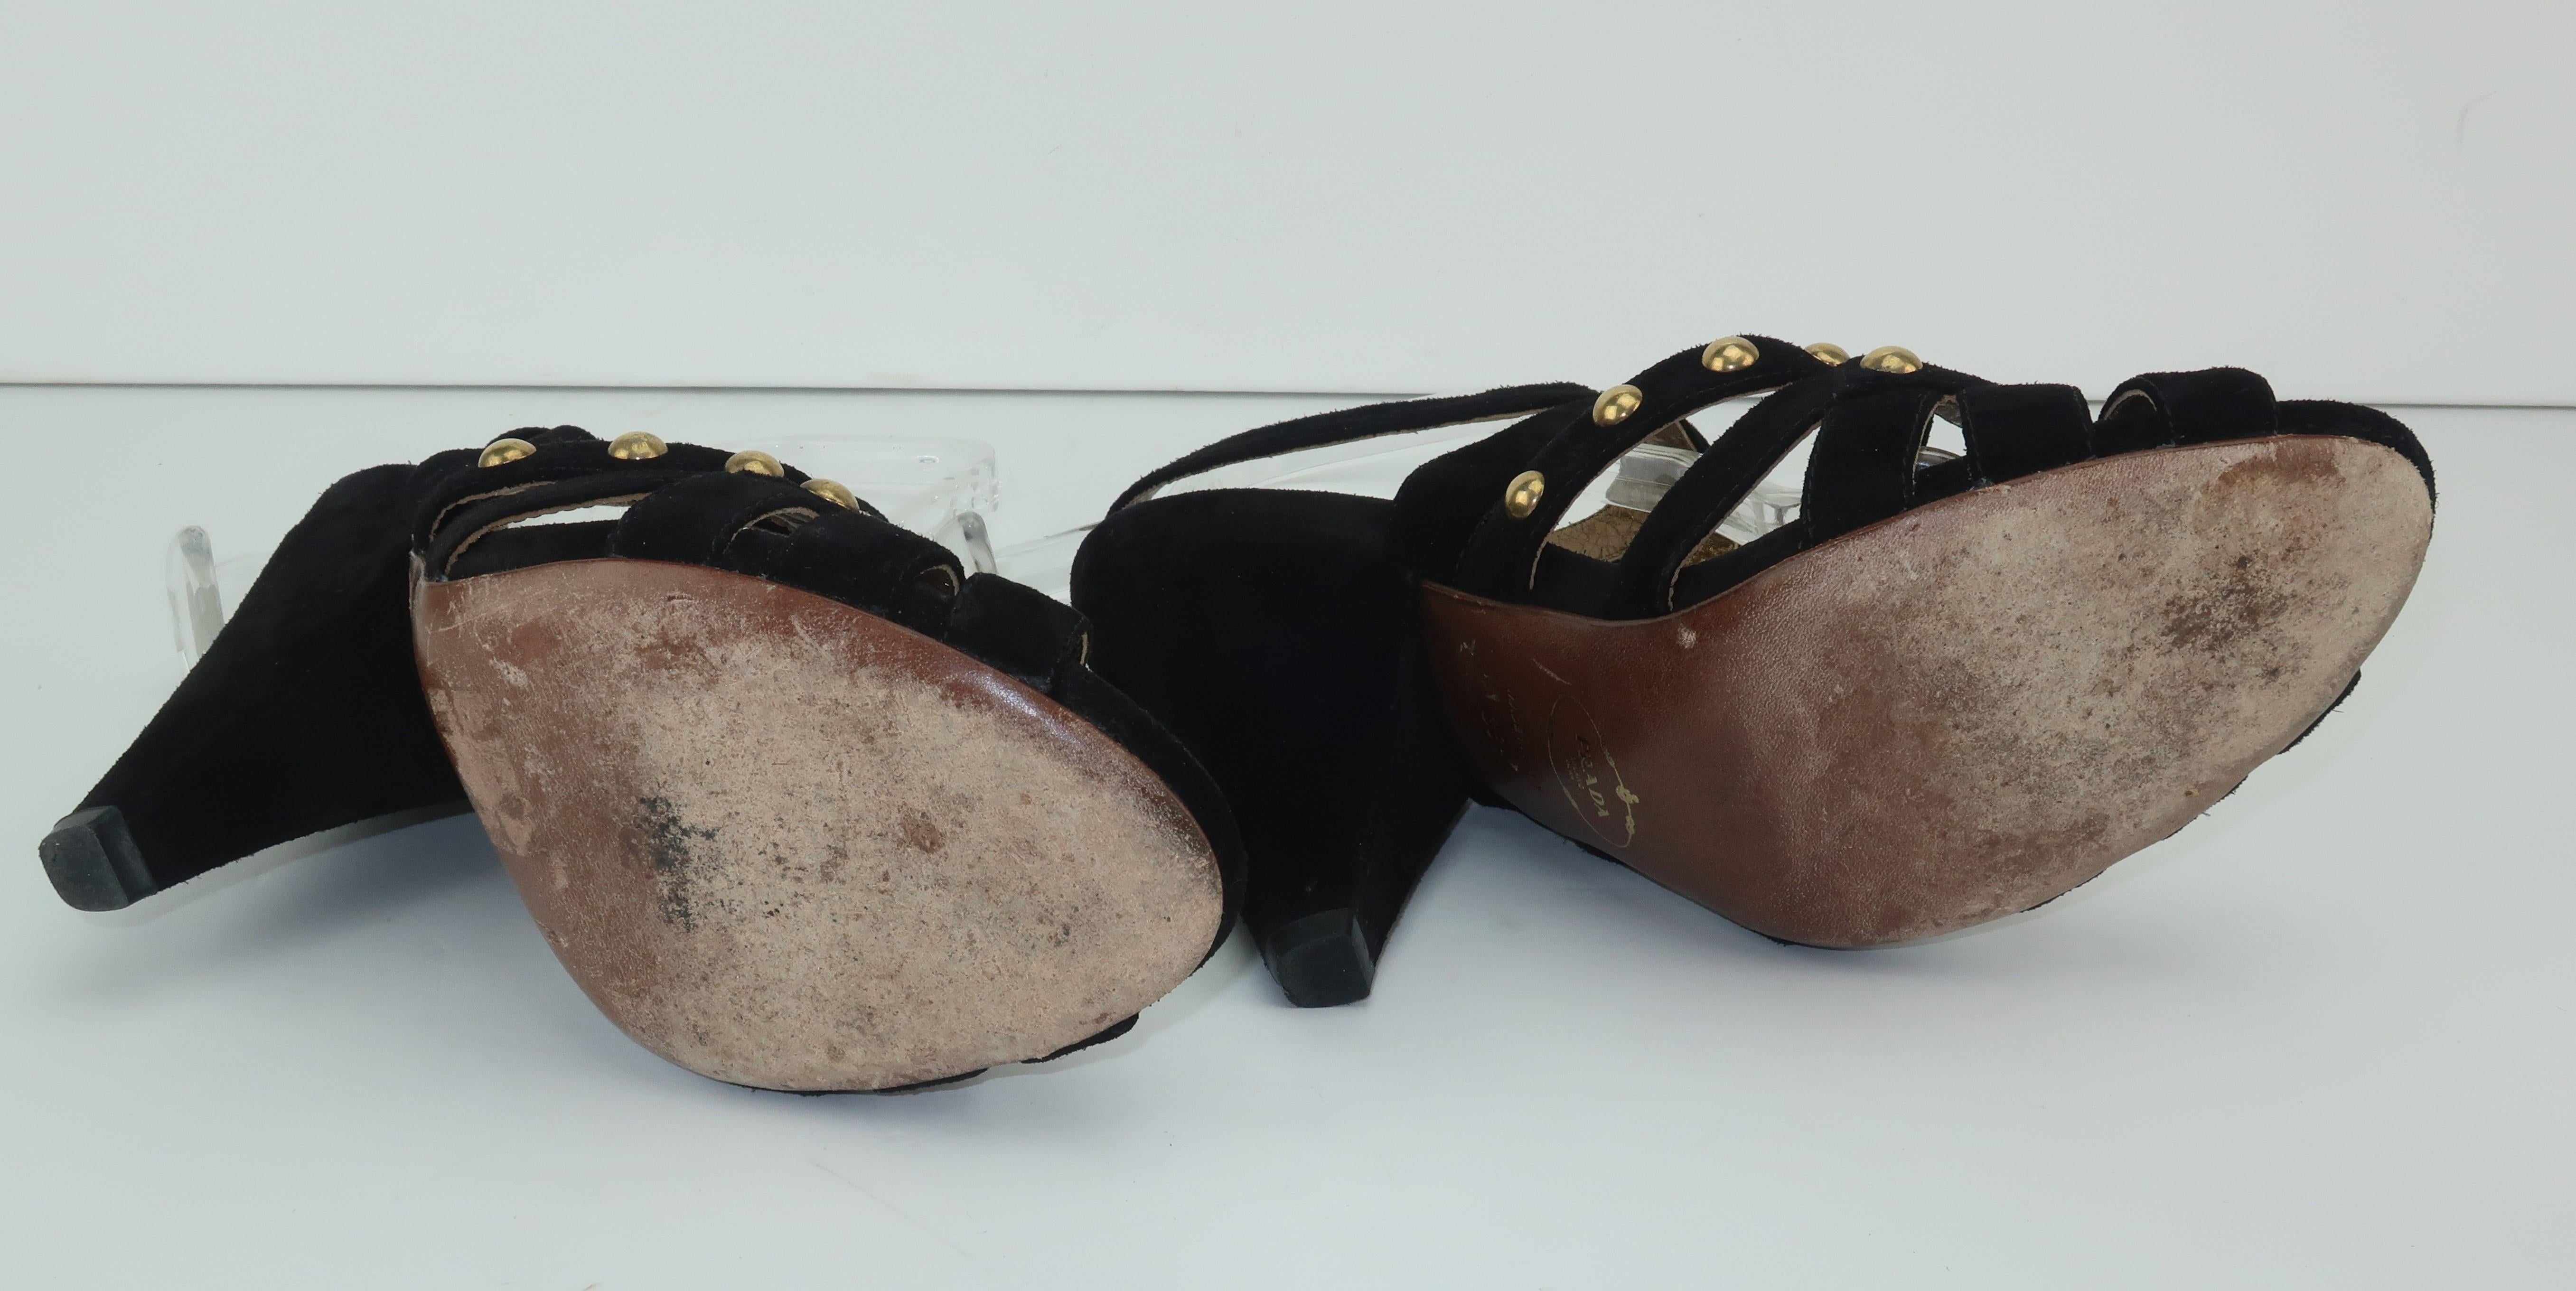 Prada Black Suede & Gold Stud Sandals Shoes Sz 38 For Sale 3